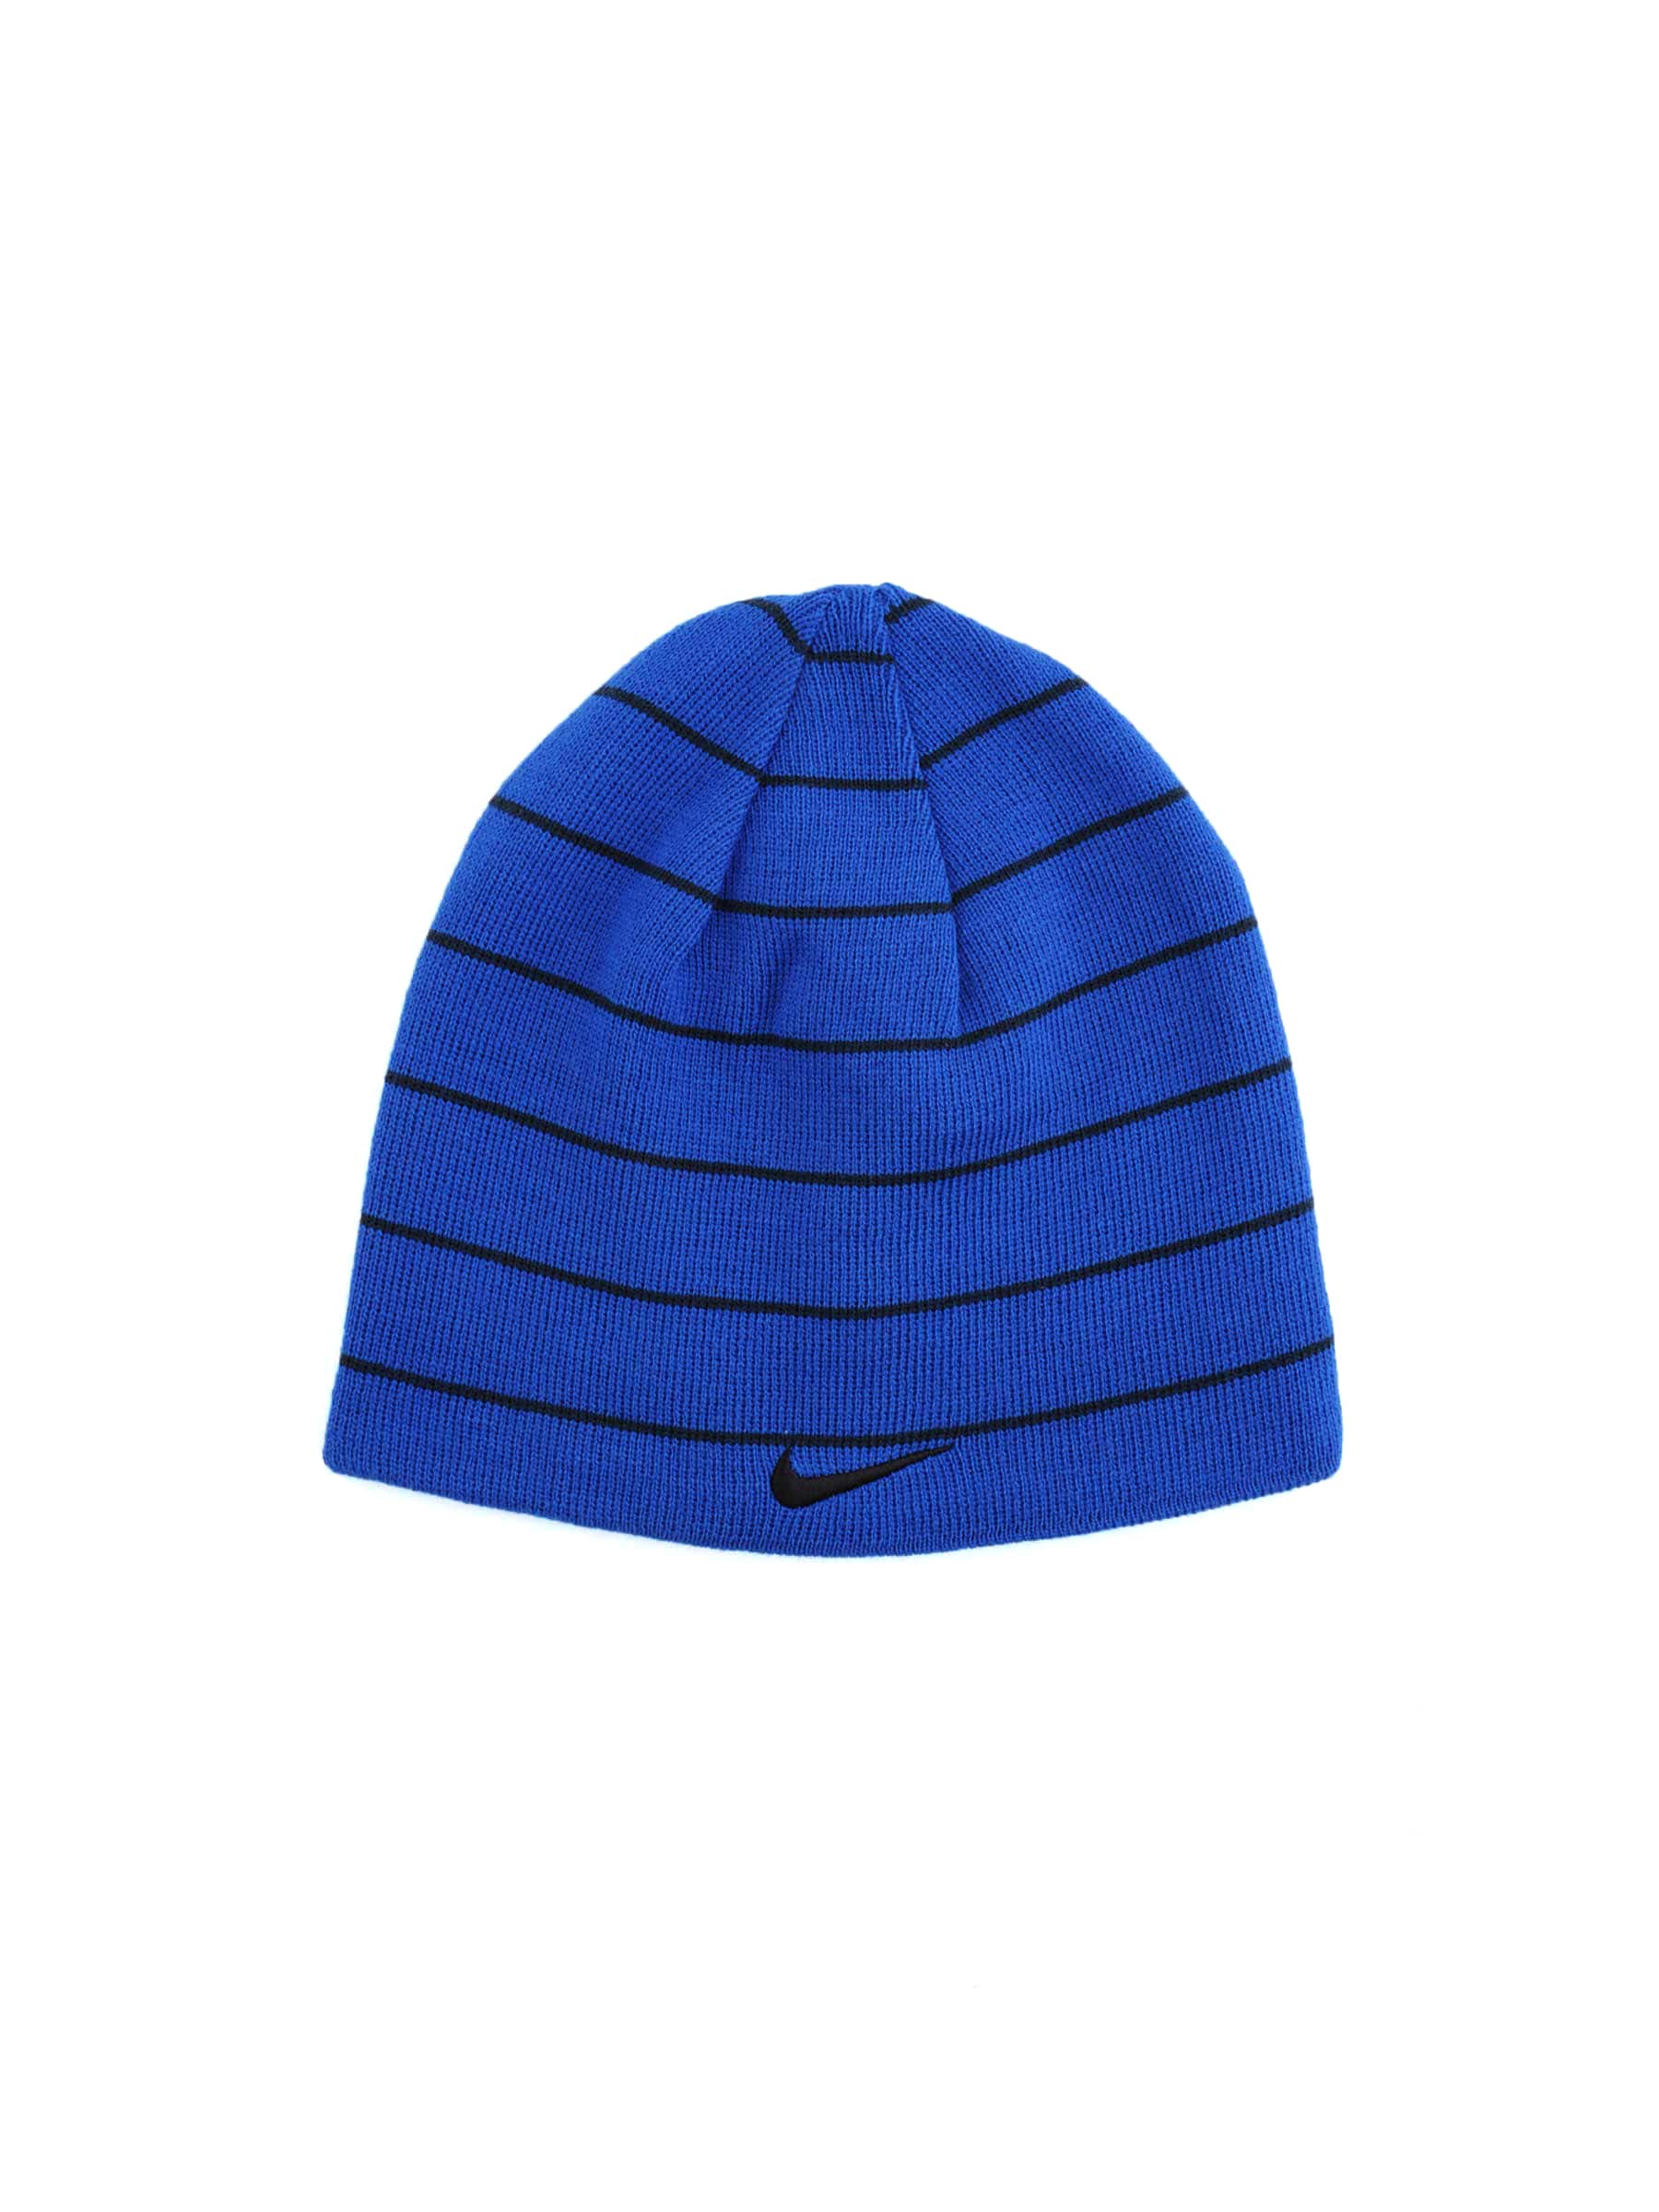 Nike Unisex Knit Beanie Blue Skull Cap